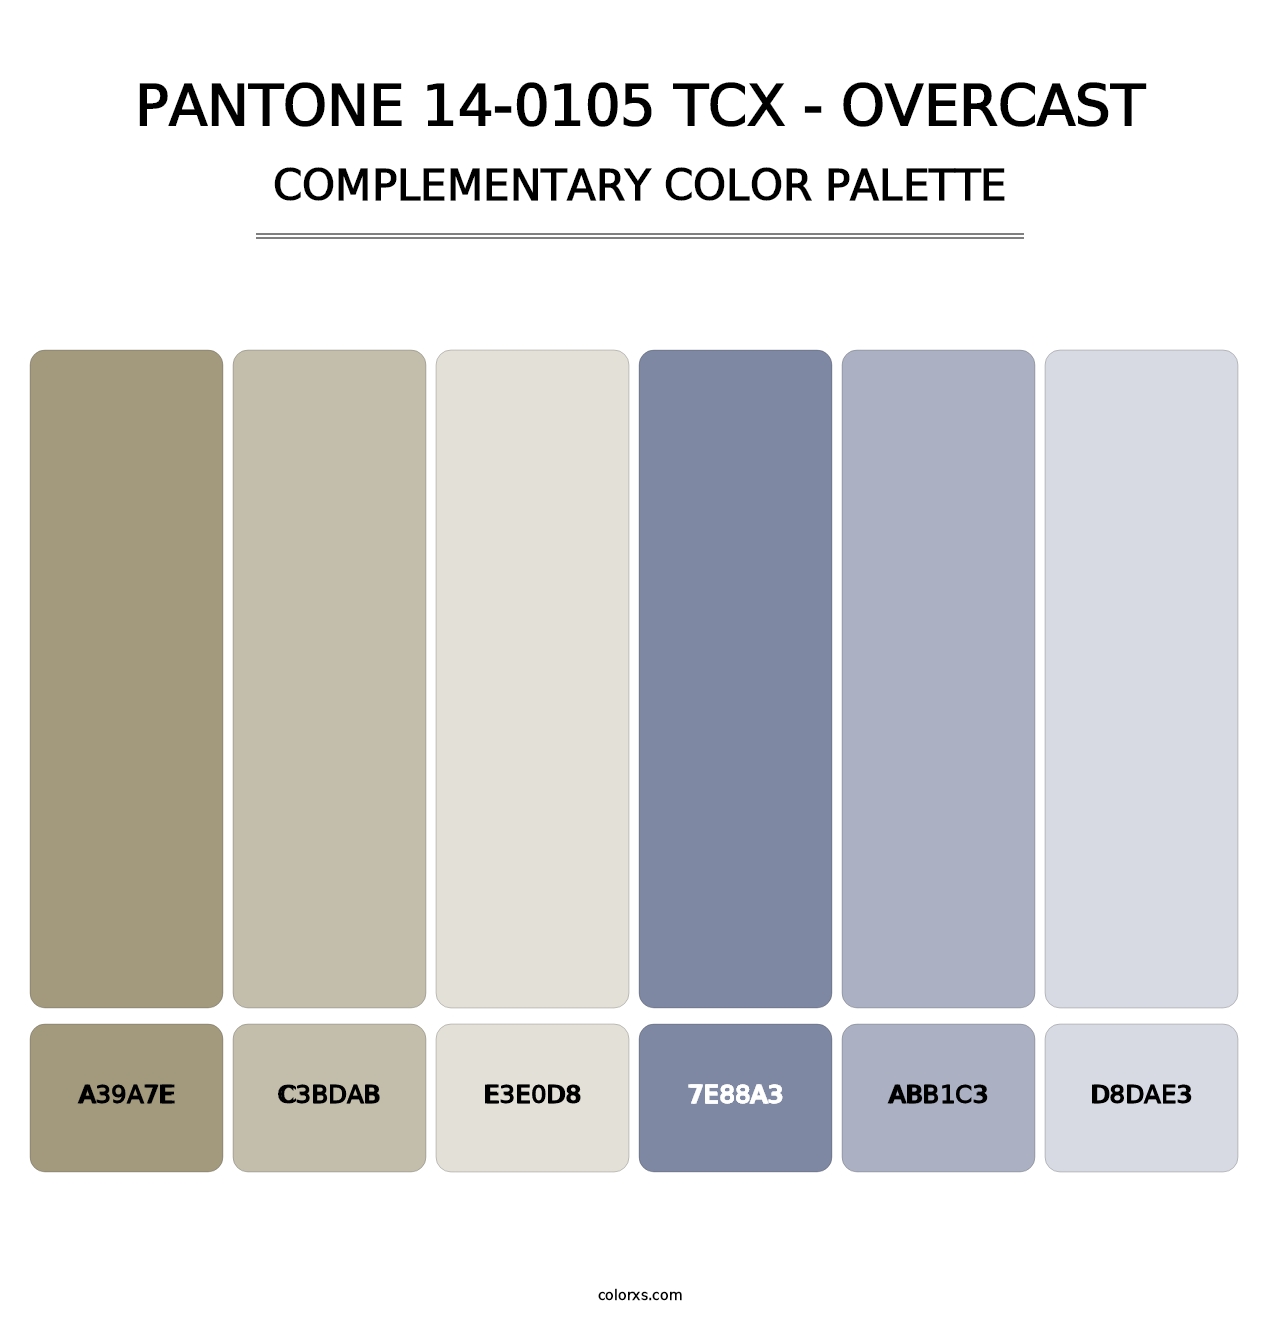 PANTONE 14-0105 TCX - Overcast - Complementary Color Palette